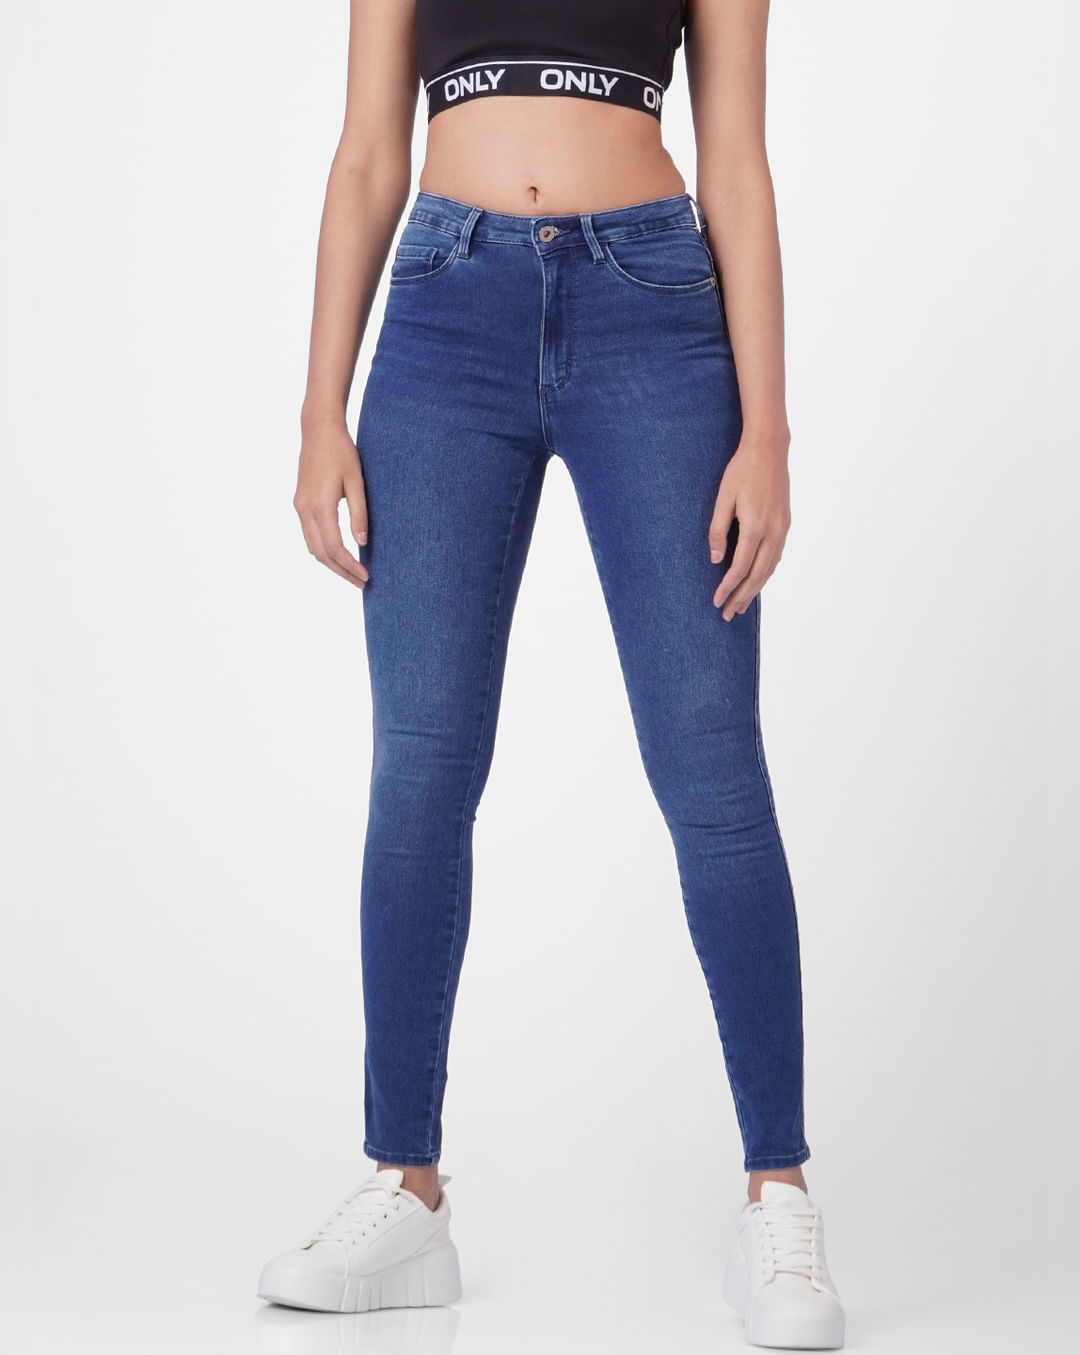 Buy Blue High Rise Skinny Jeans For Women -